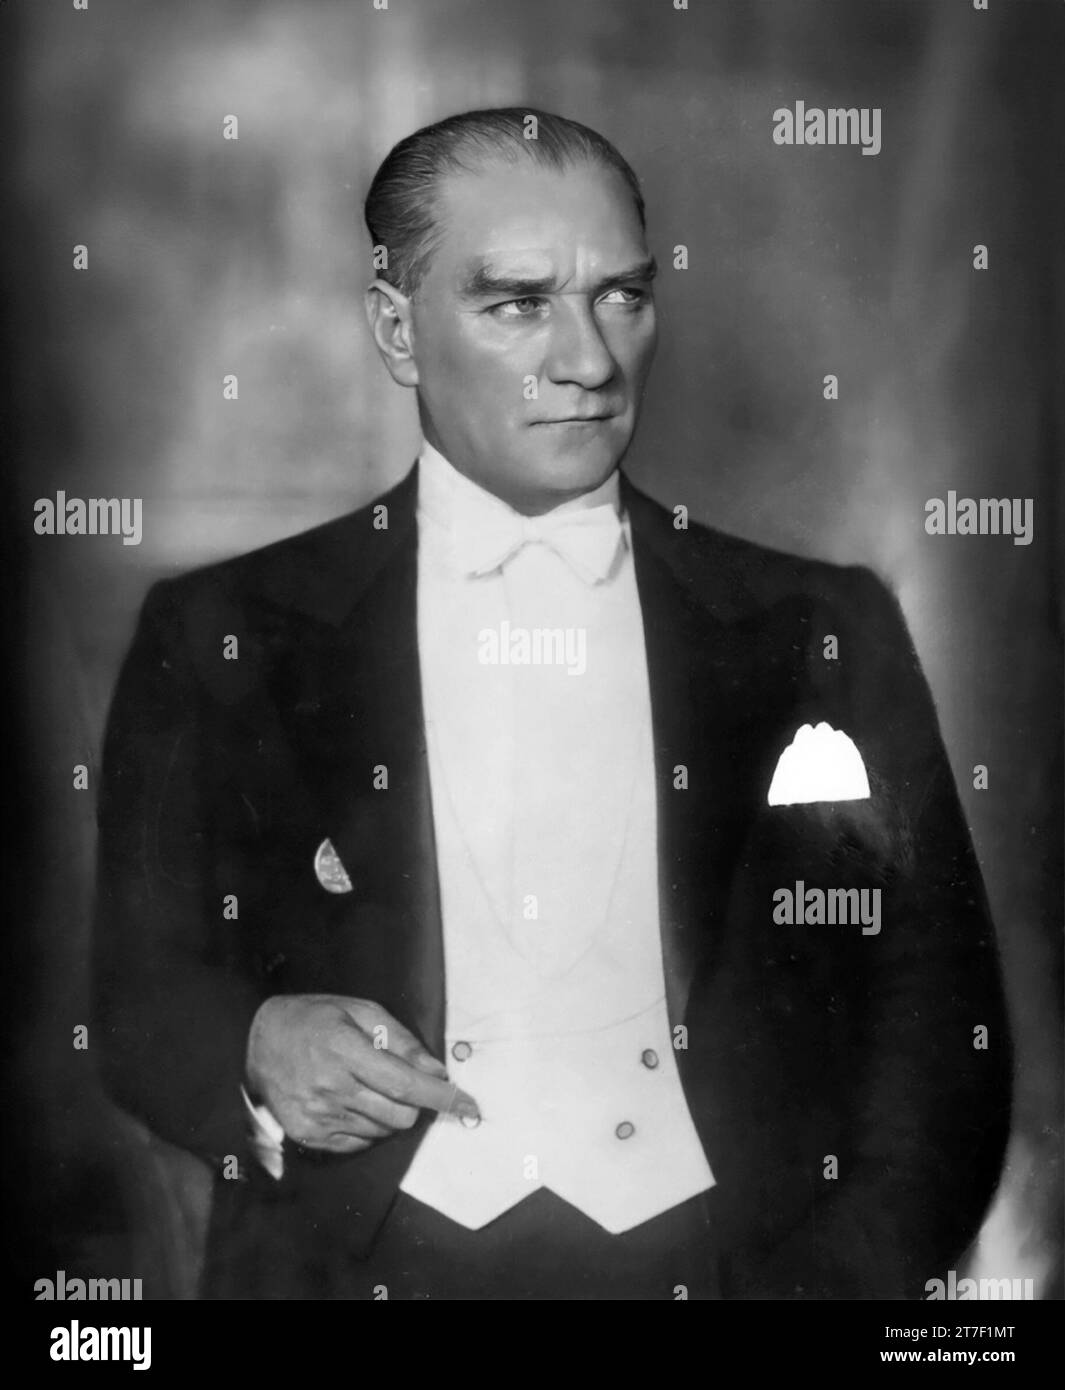 Mustafa Kemal Ataturk. Portrait of the former president of Turkey and founder of the Turkish Republic,  Mustafa Kemal Atatürk or Mustafa Kemal Pasha (c. 1881-1938), 1932 Stock Photo